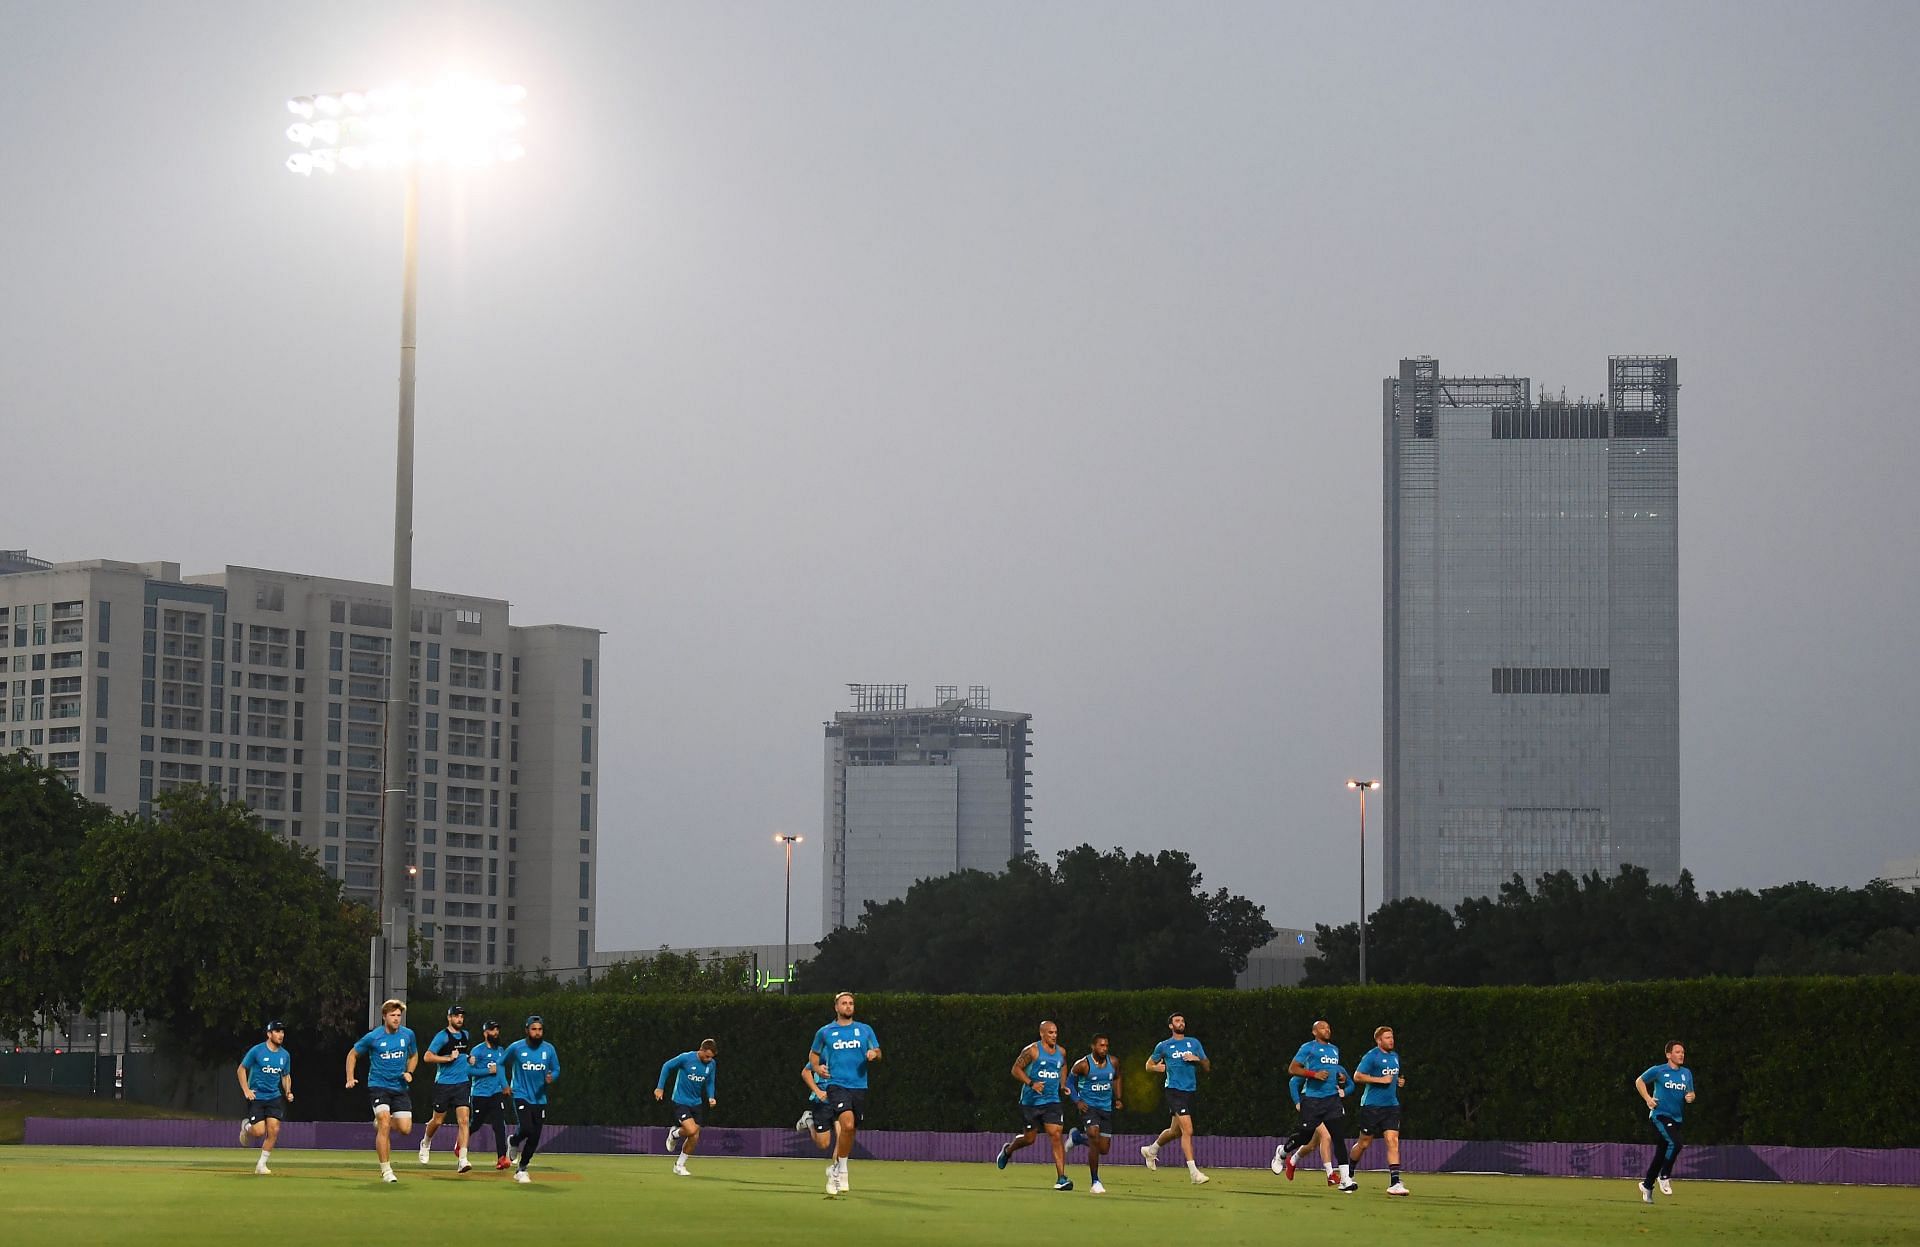 The ICC Academy Cricket Ground in Dubai, UAE